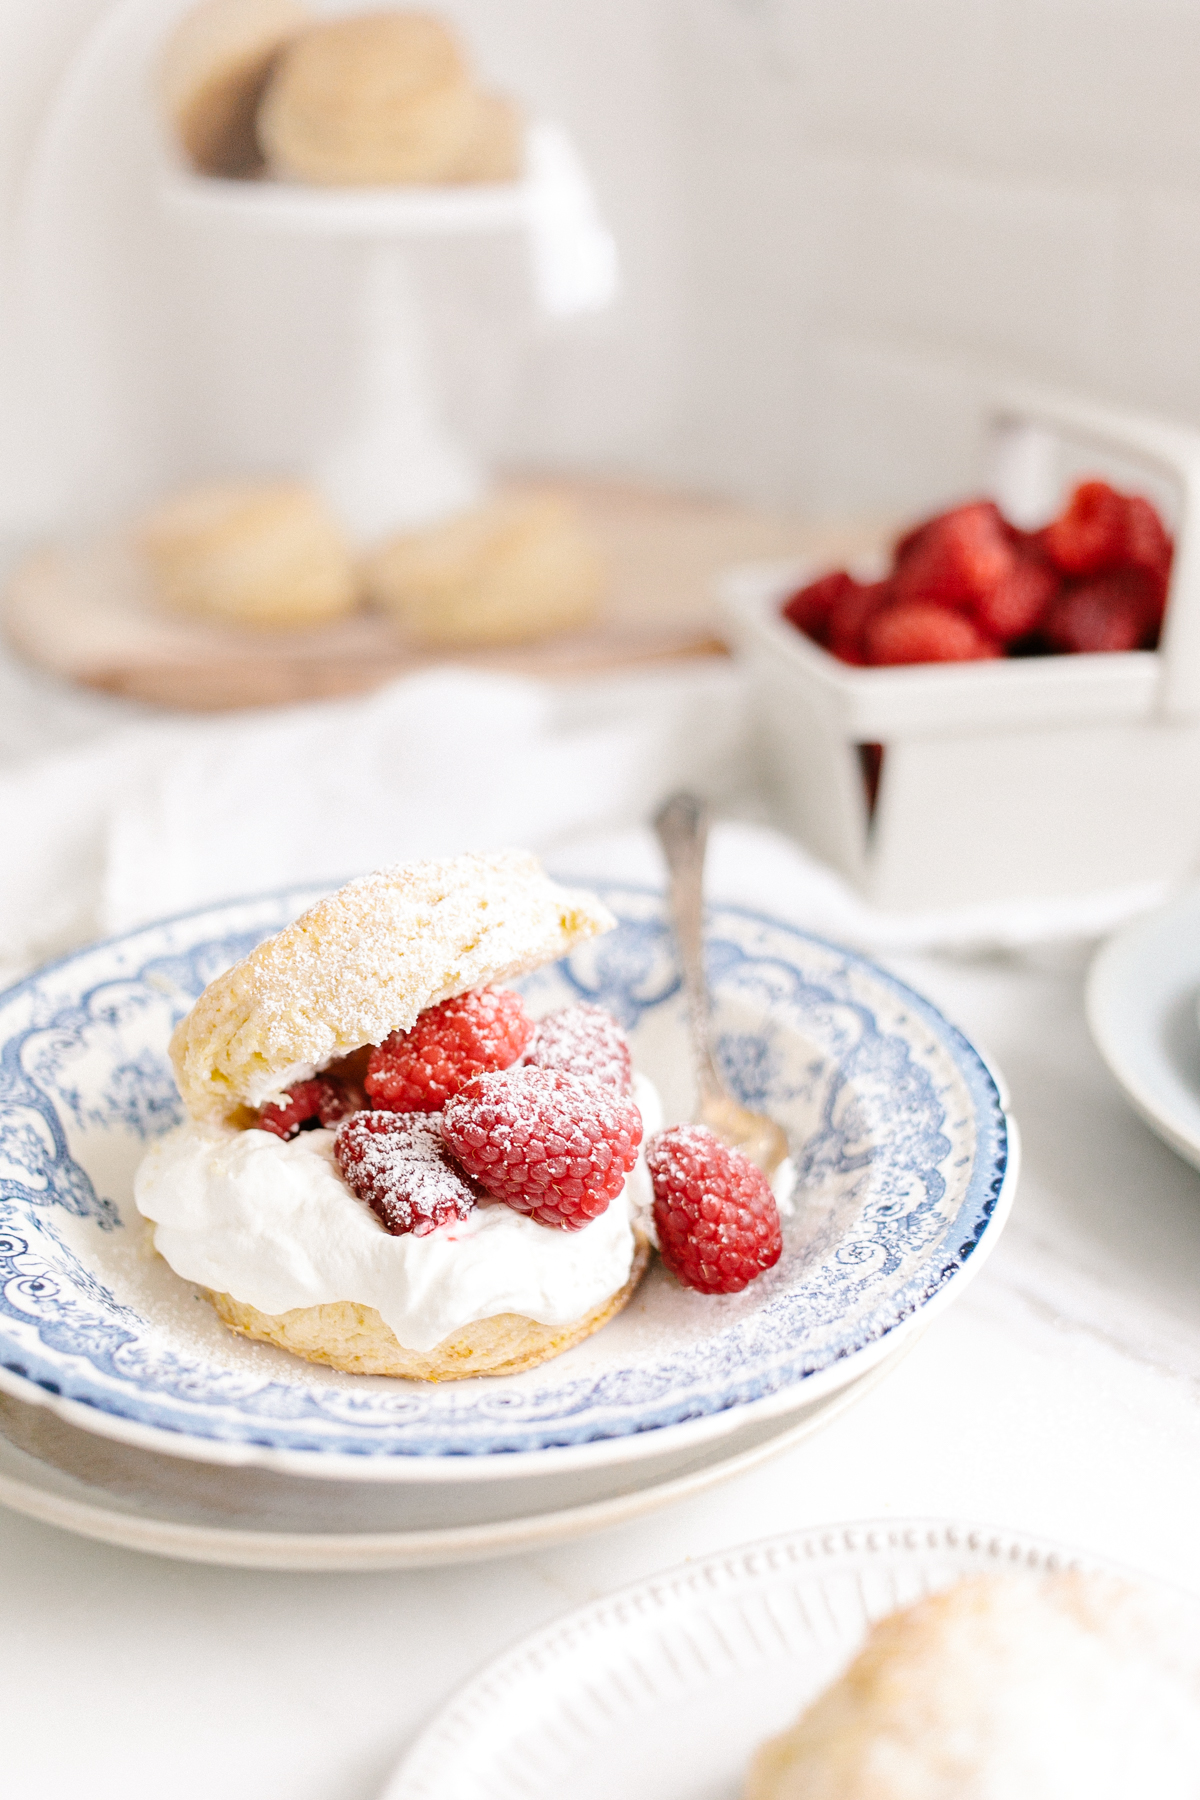 cornmeal shortcake with fresh raspberries and whipped cream